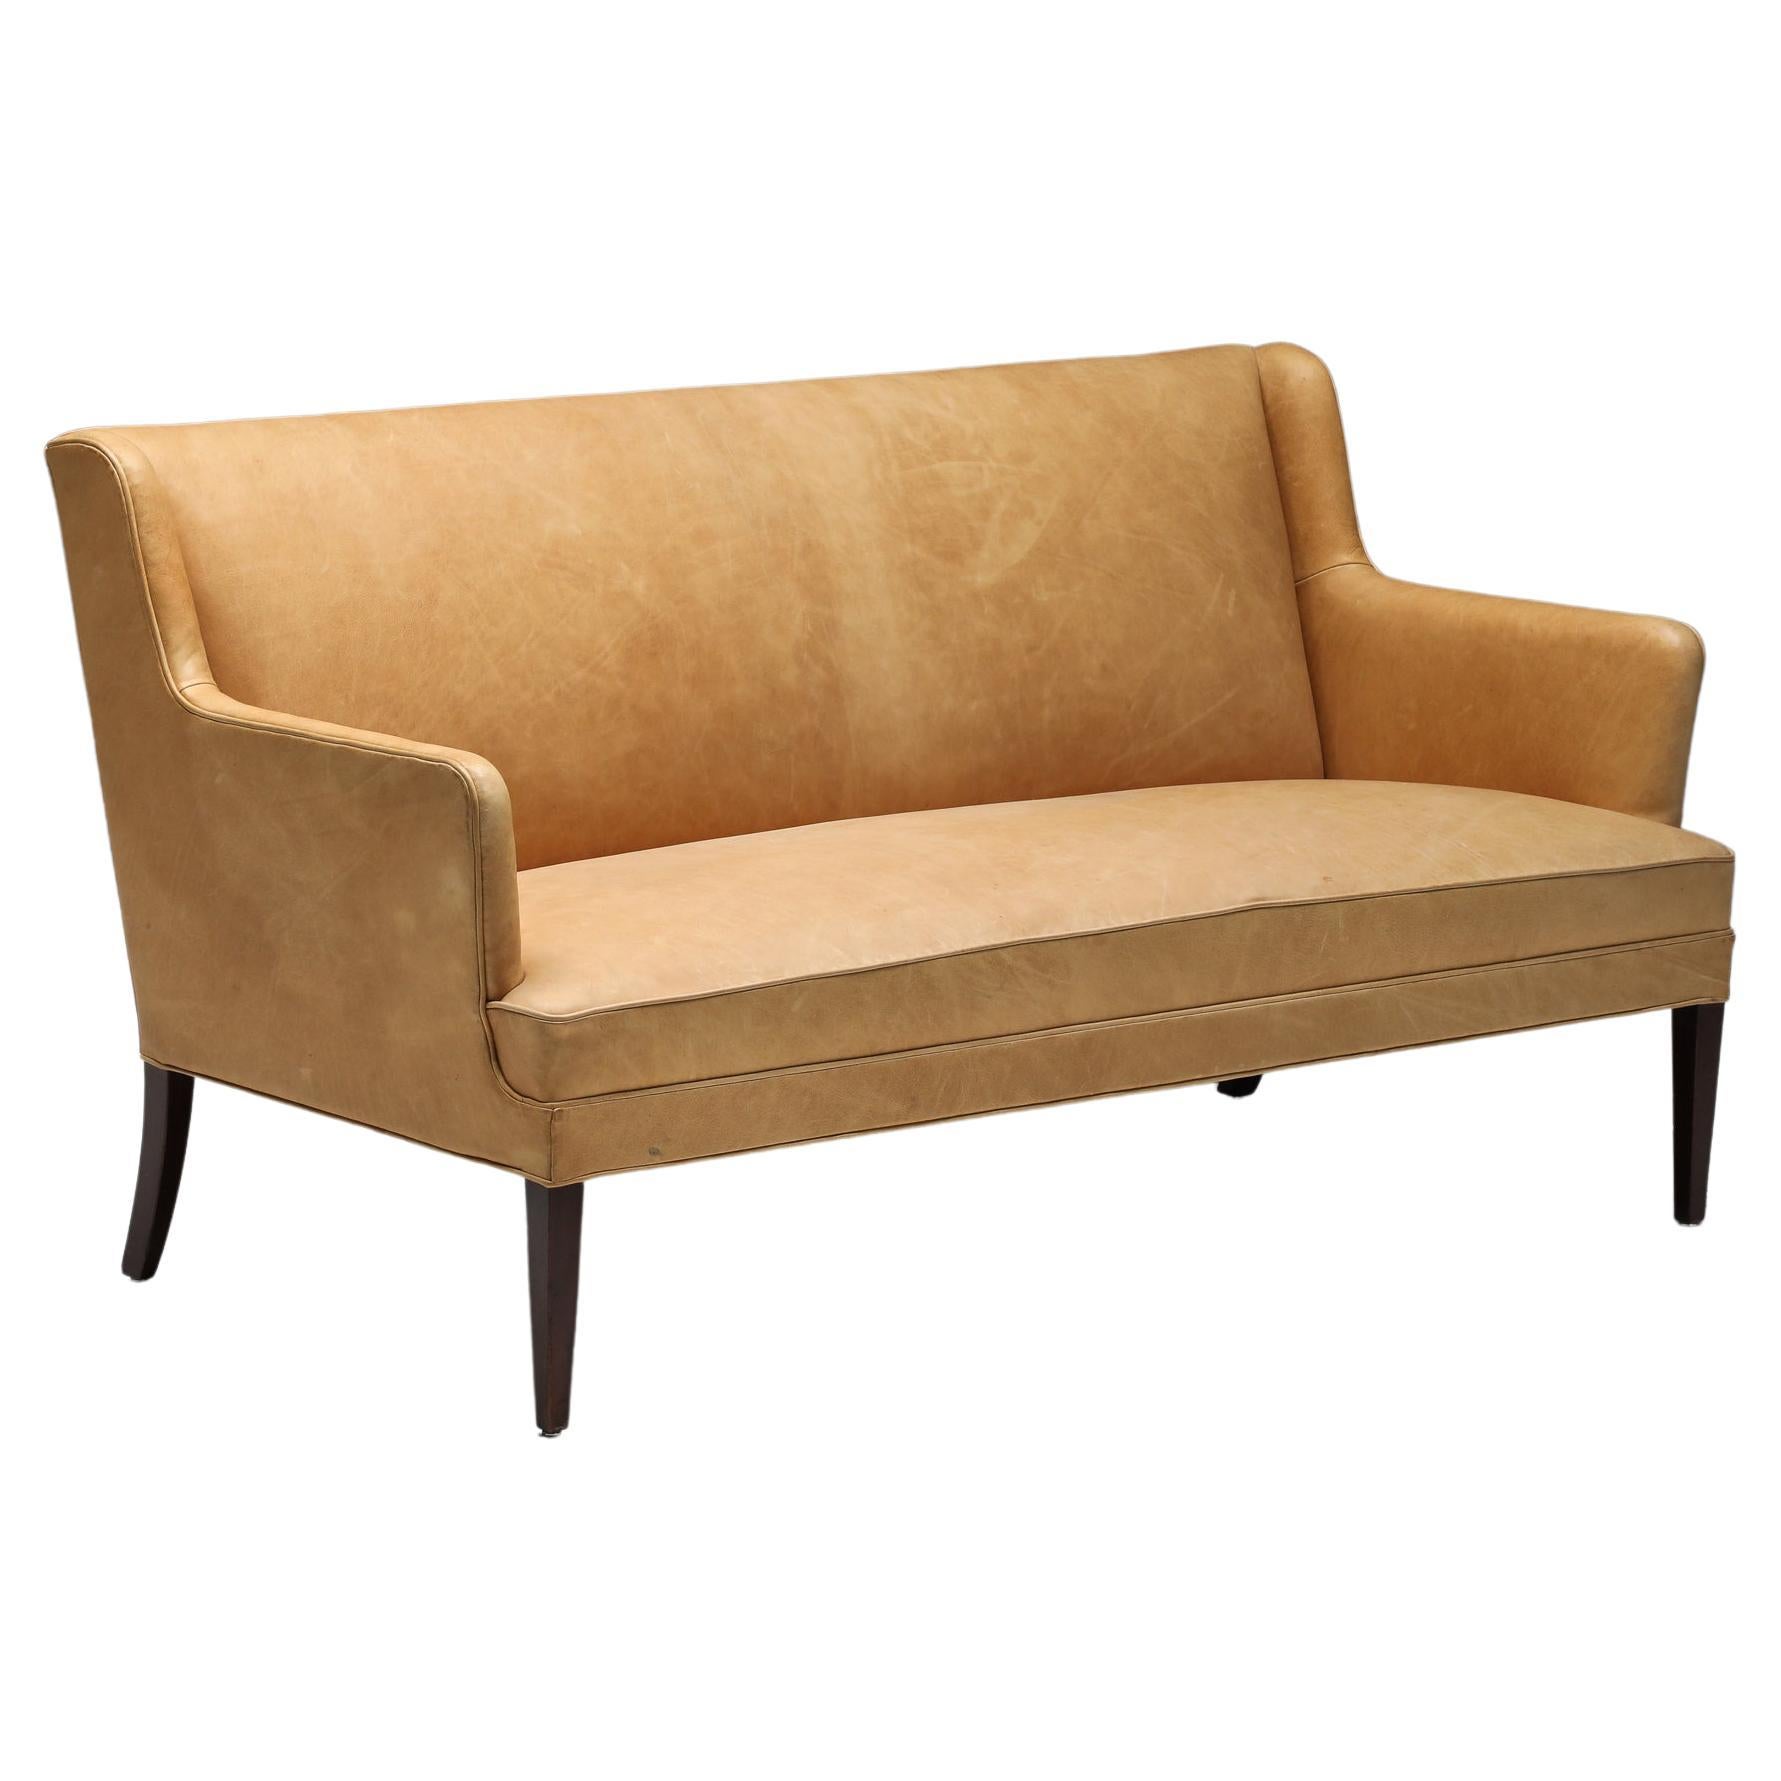 Scandinavian Design, Nanna Ditzel Style Danish Sofa In Camel Leather, 1950's